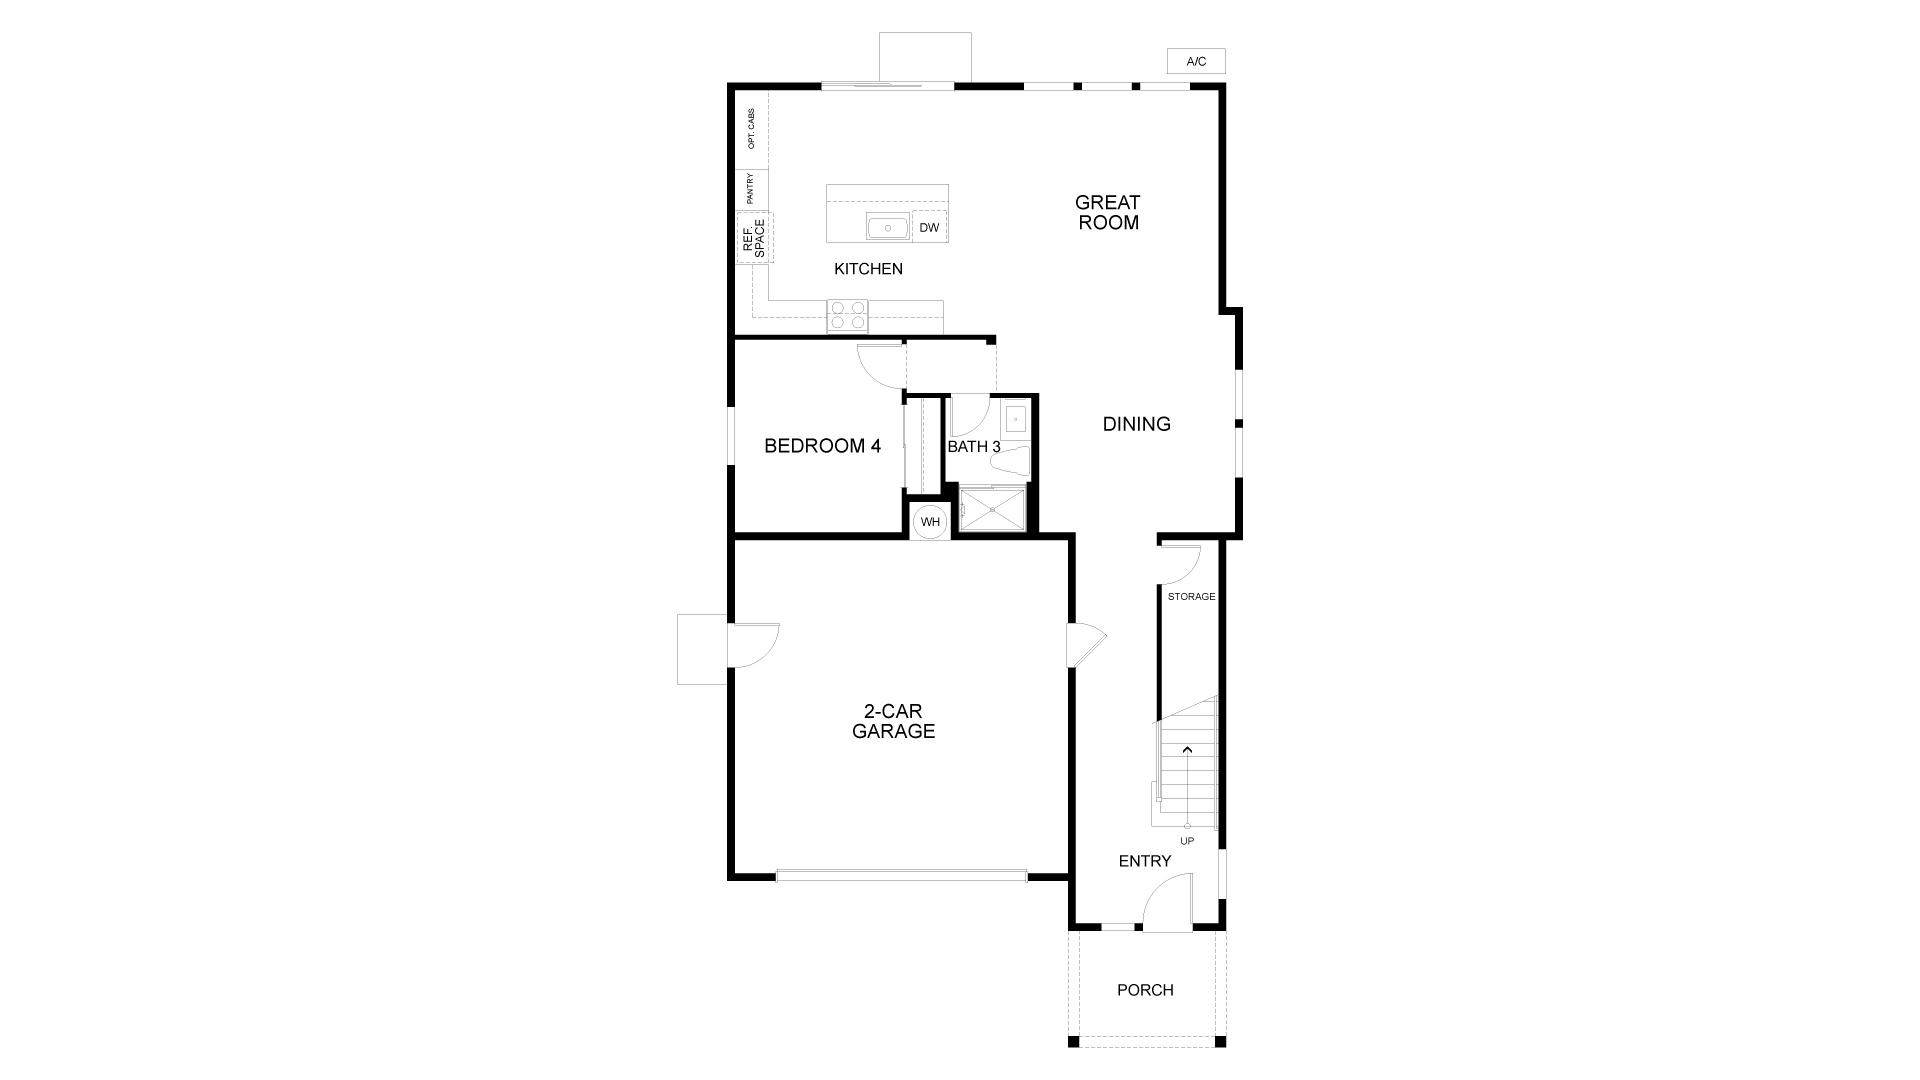 Residence 3 First Floor. 4br New Home in Petaluma, CA